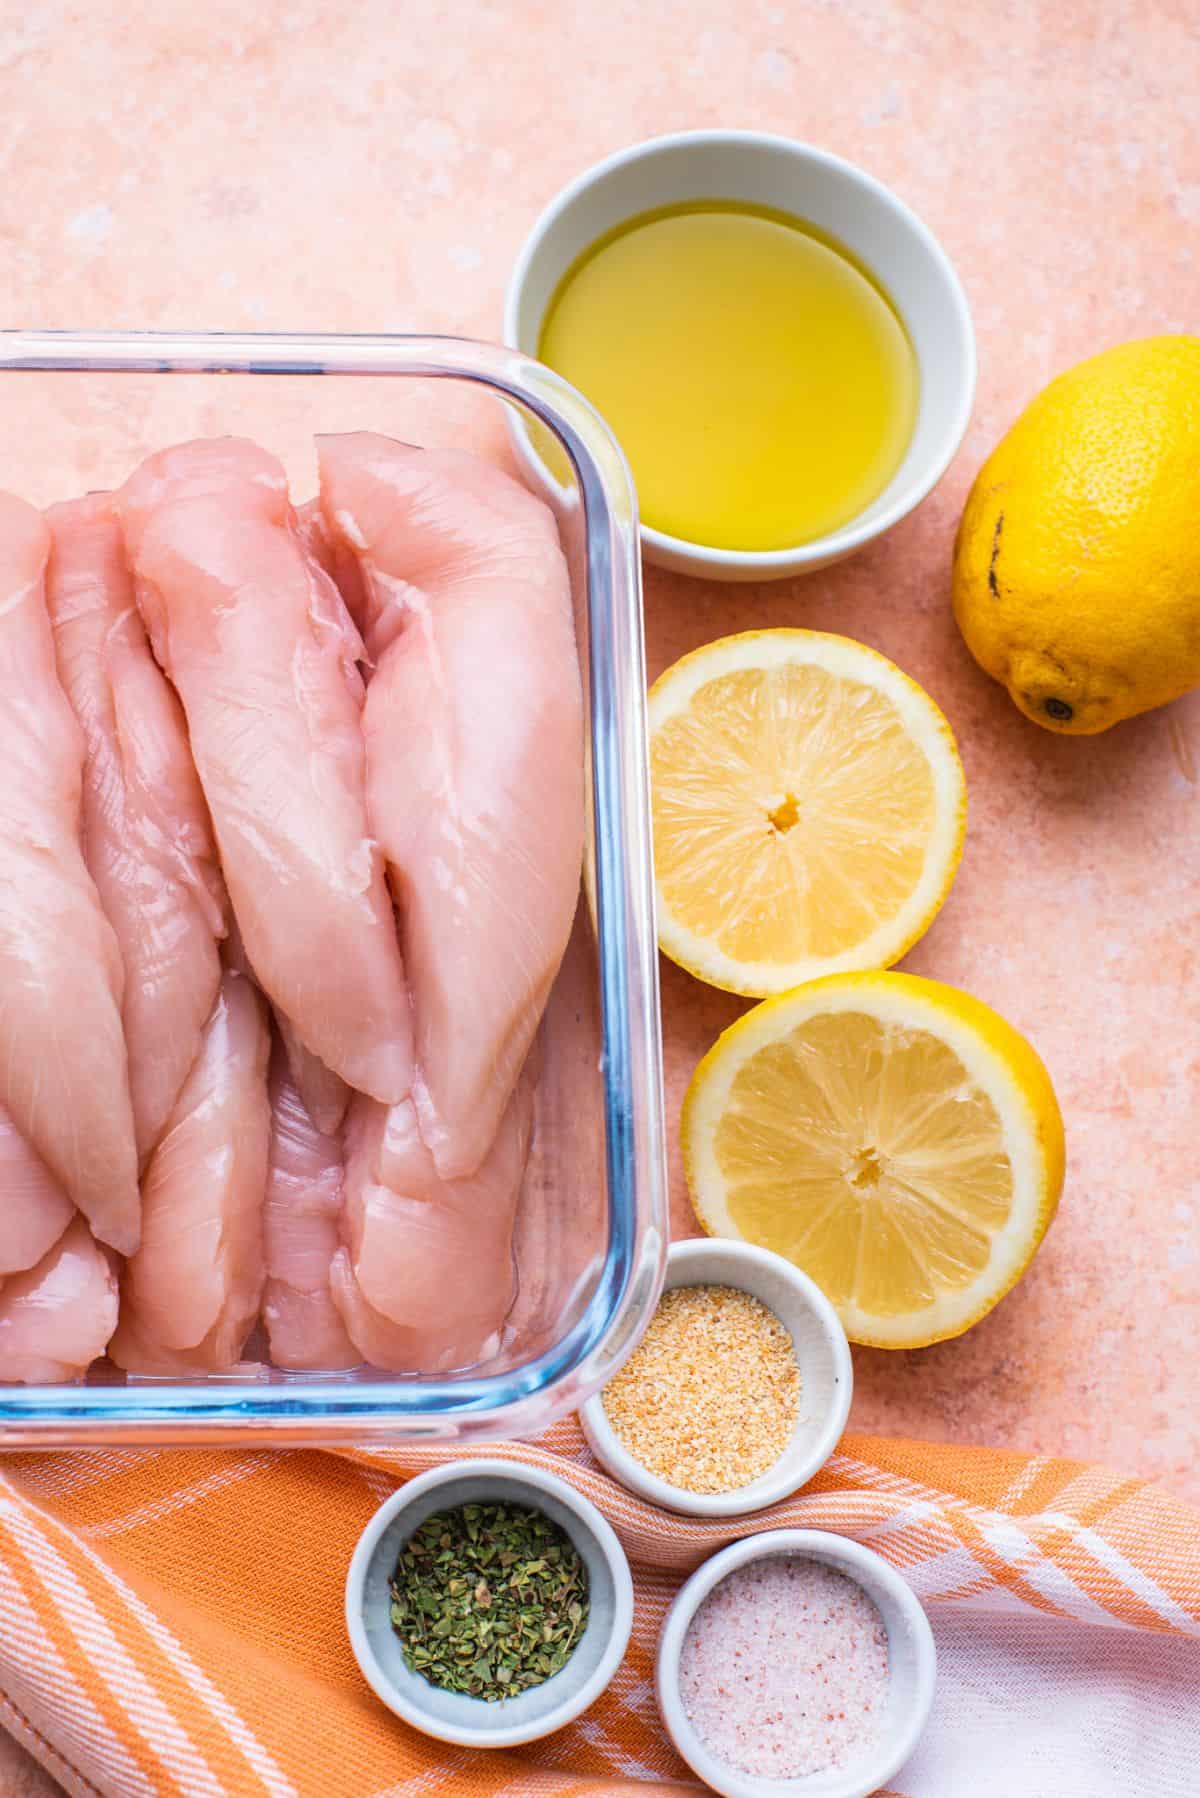 raw strips of chicken seasonings sliced lemon and olive oil